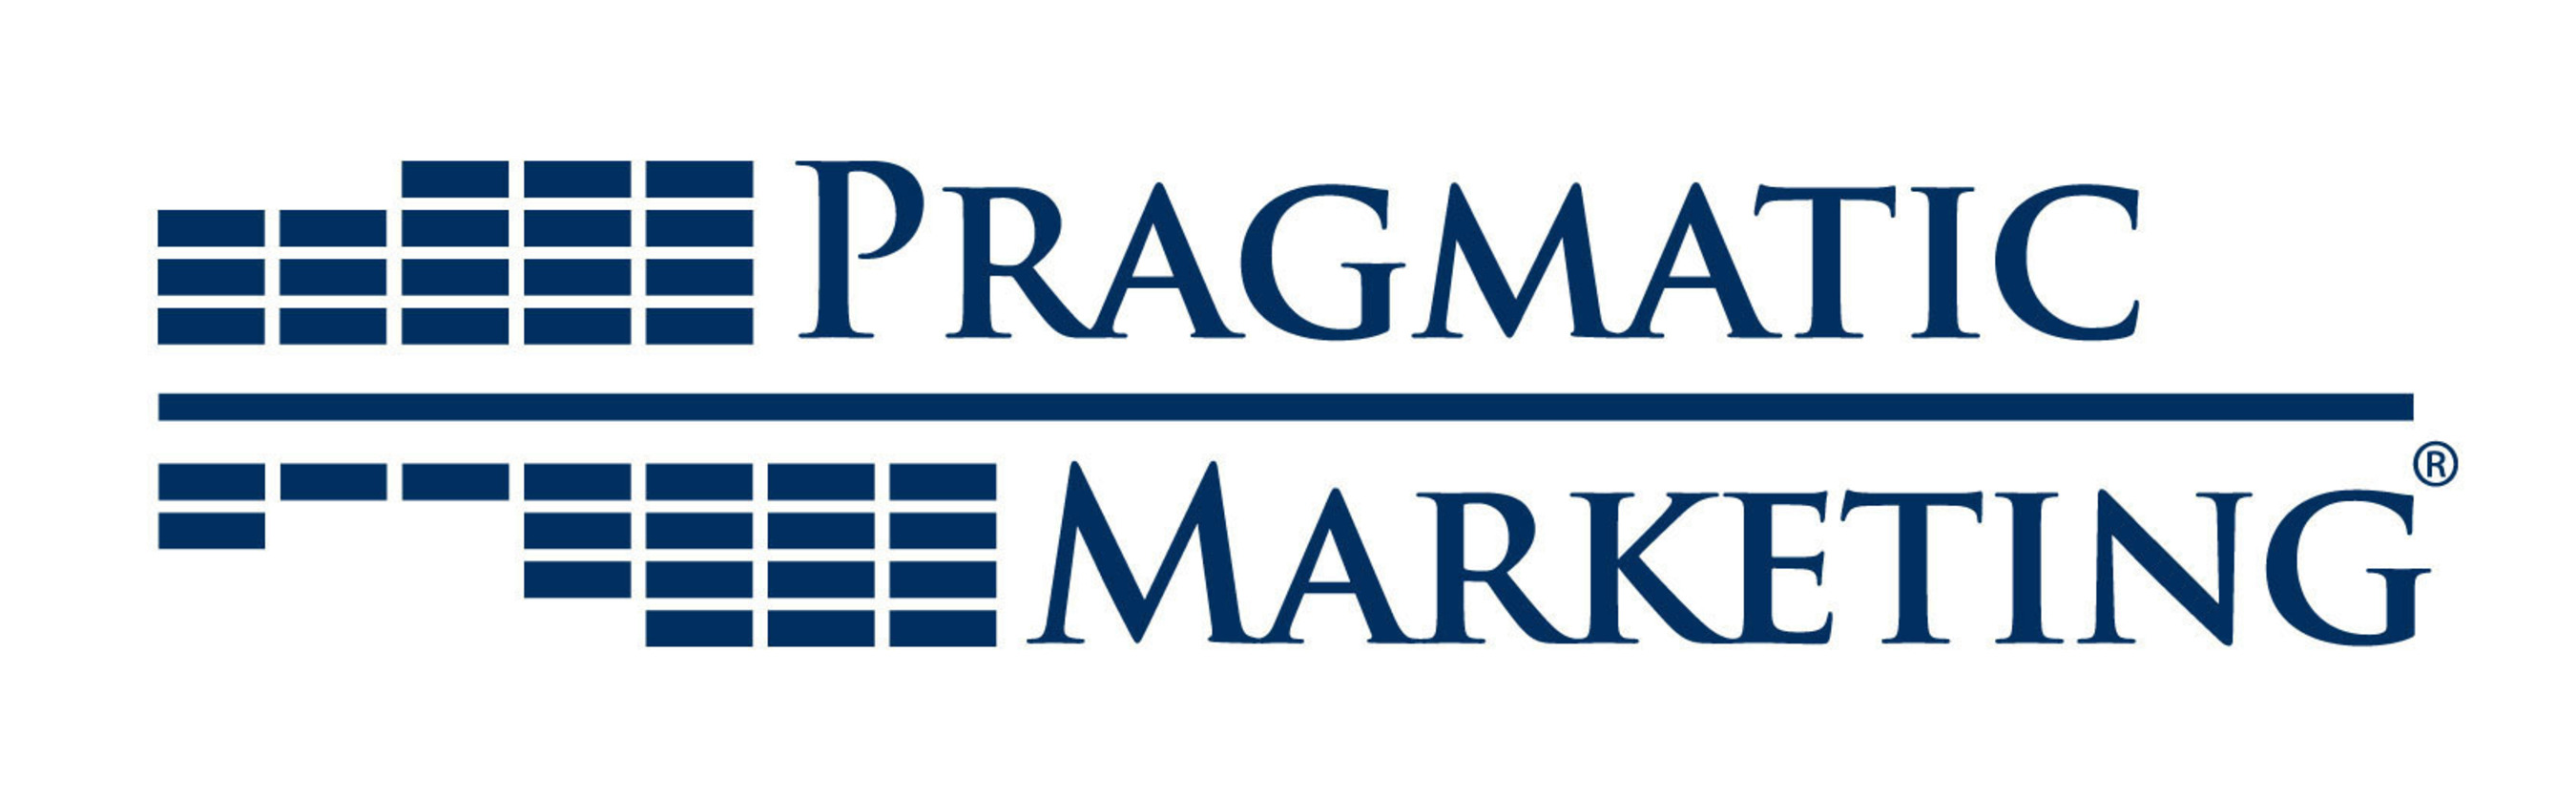 Pragmatic Marketing Logo. (PRNewsFoto/Pragmatic Marketing, Inc.) (PRNewsFoto/PRAGMATIC MARKETING, INC.)